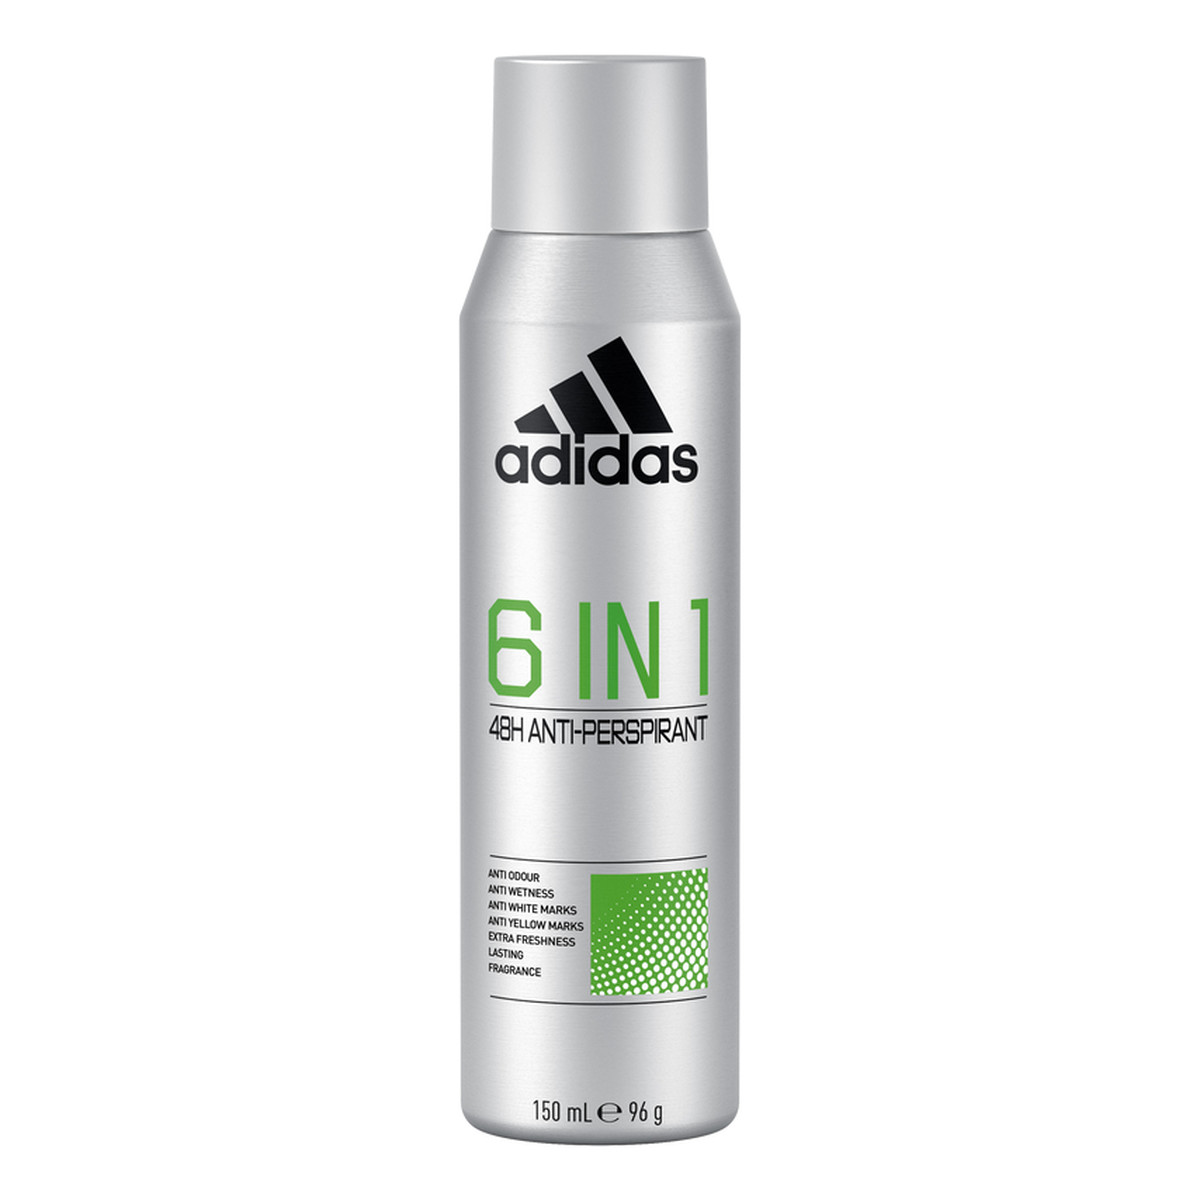 Adidas Men Antyperspirant spray 6in1 48H 150ml